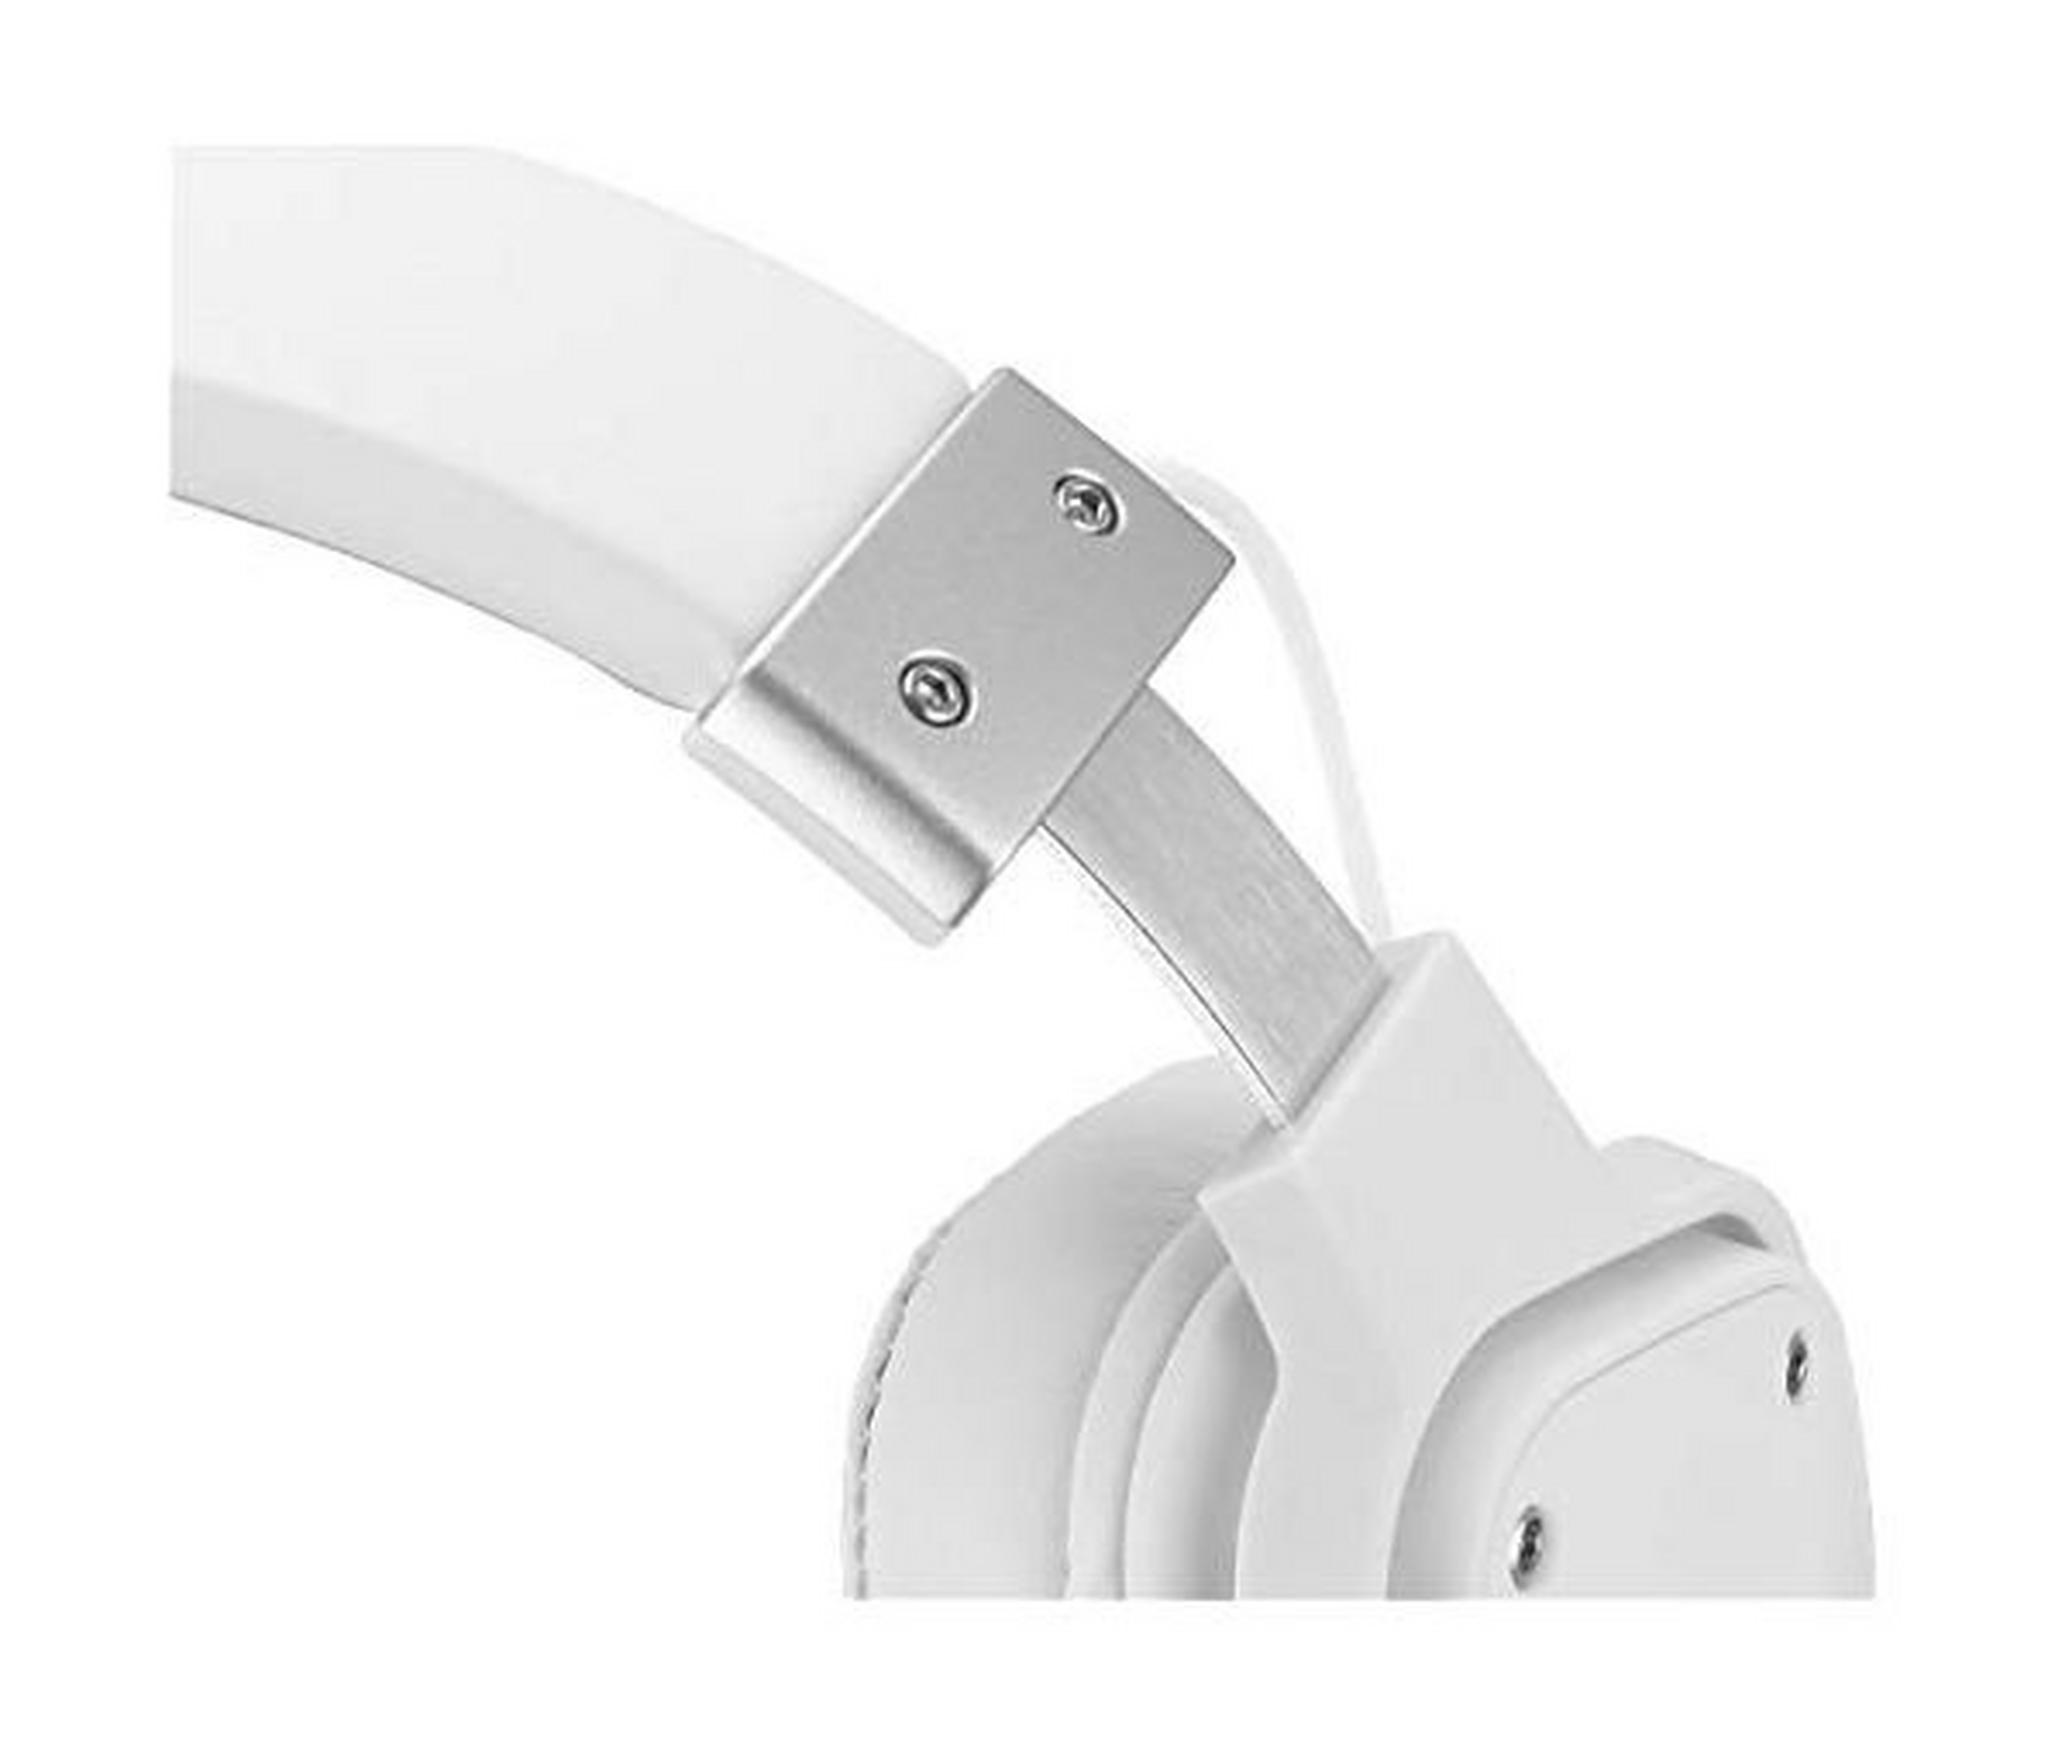 EQ Sades Snowwolf Gaming Headset (SA-722S) - White